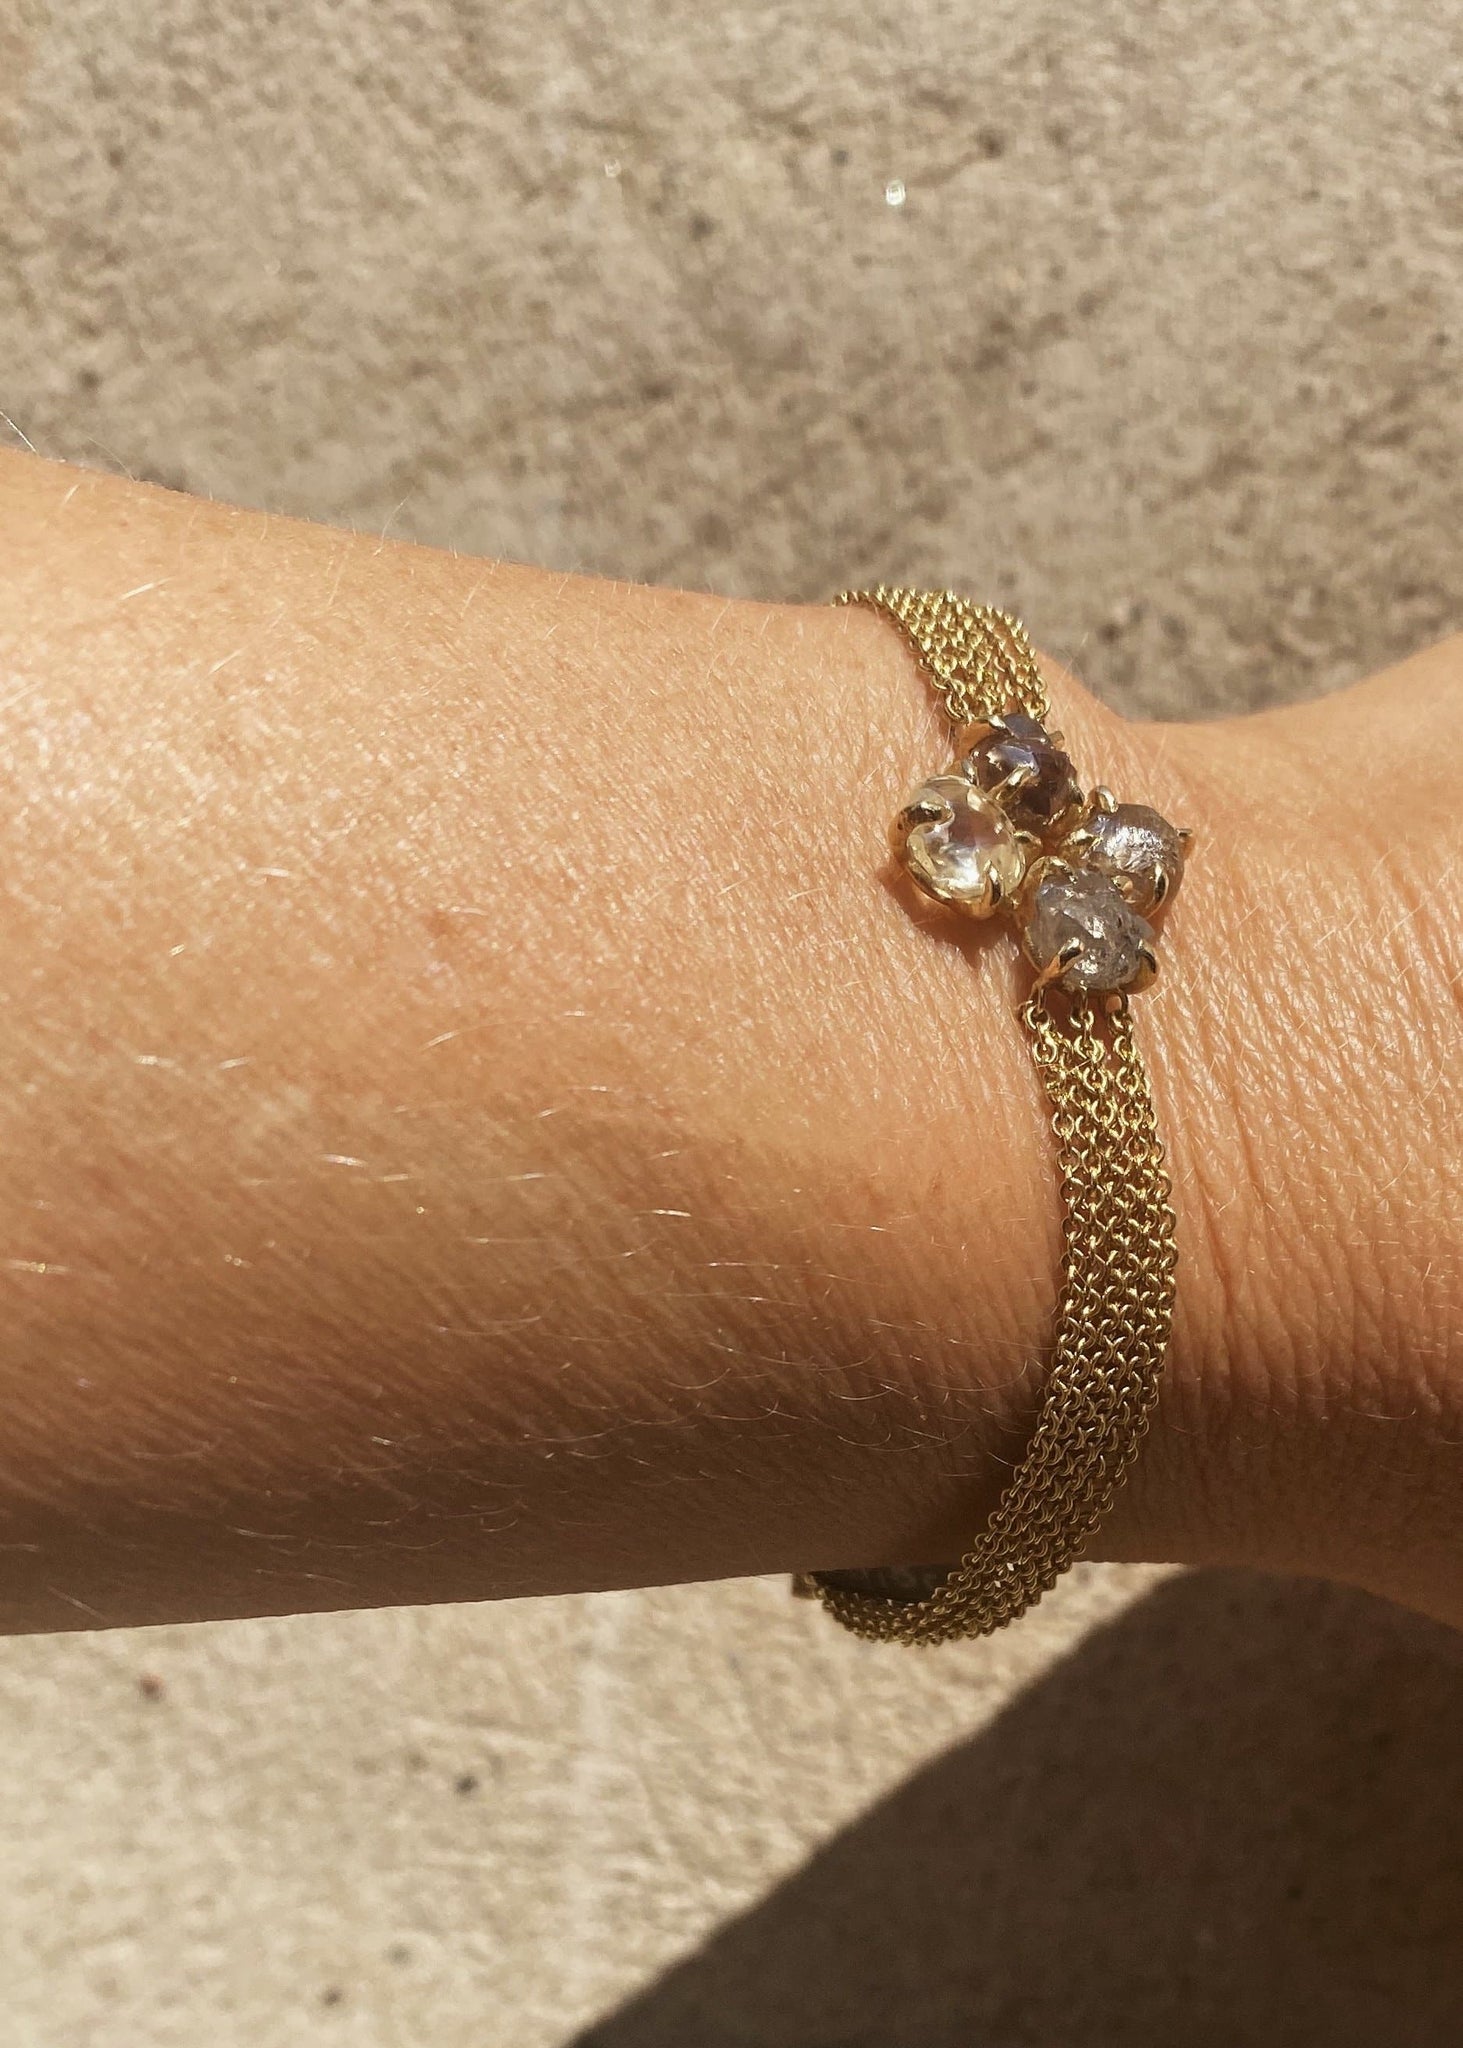 Four-Leaf Clover Diamond Bracelet